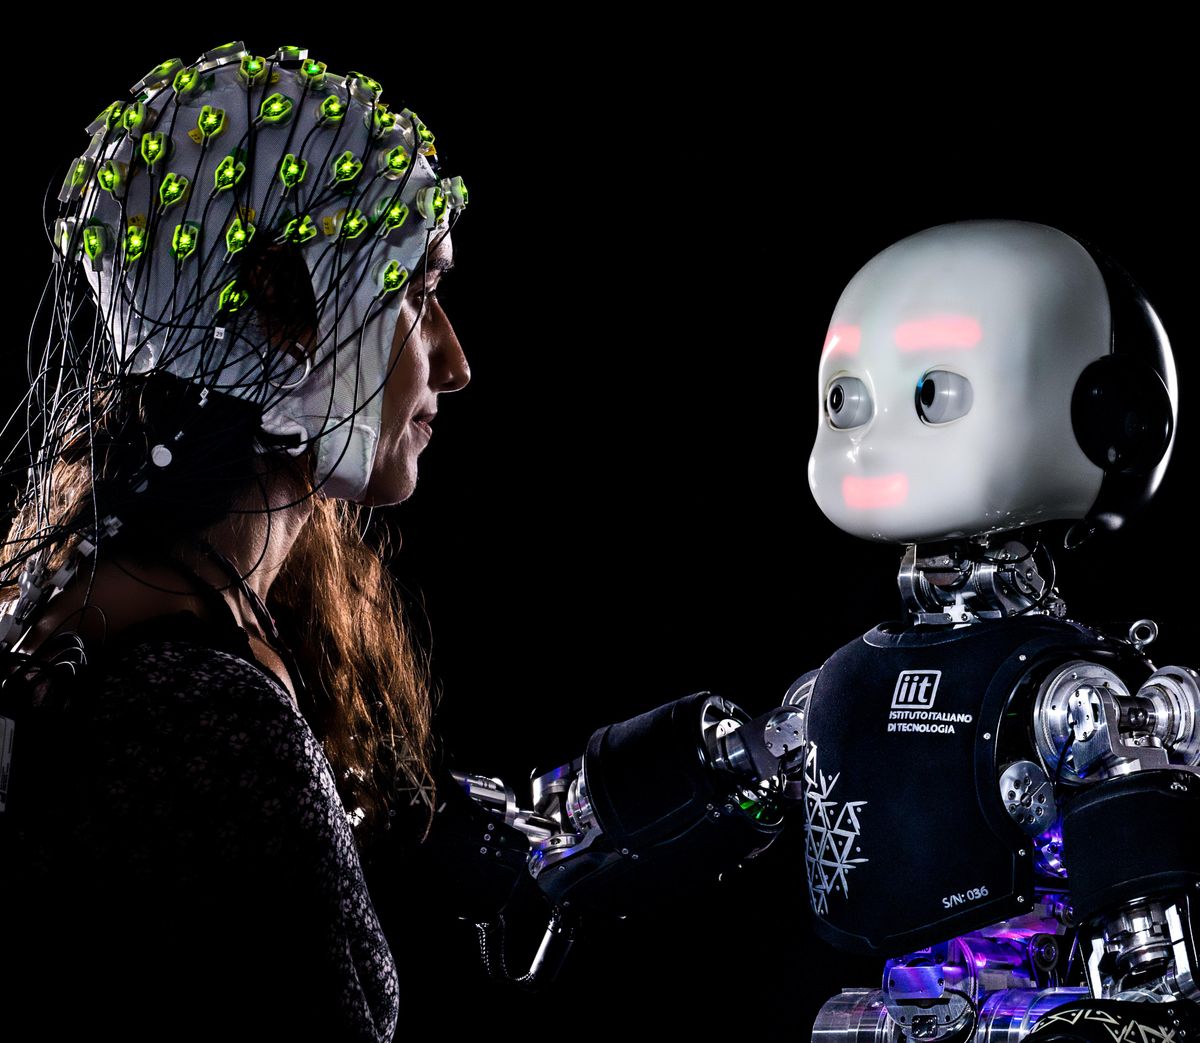 A humanoid robot gazing at a human wearing a sensorized hat